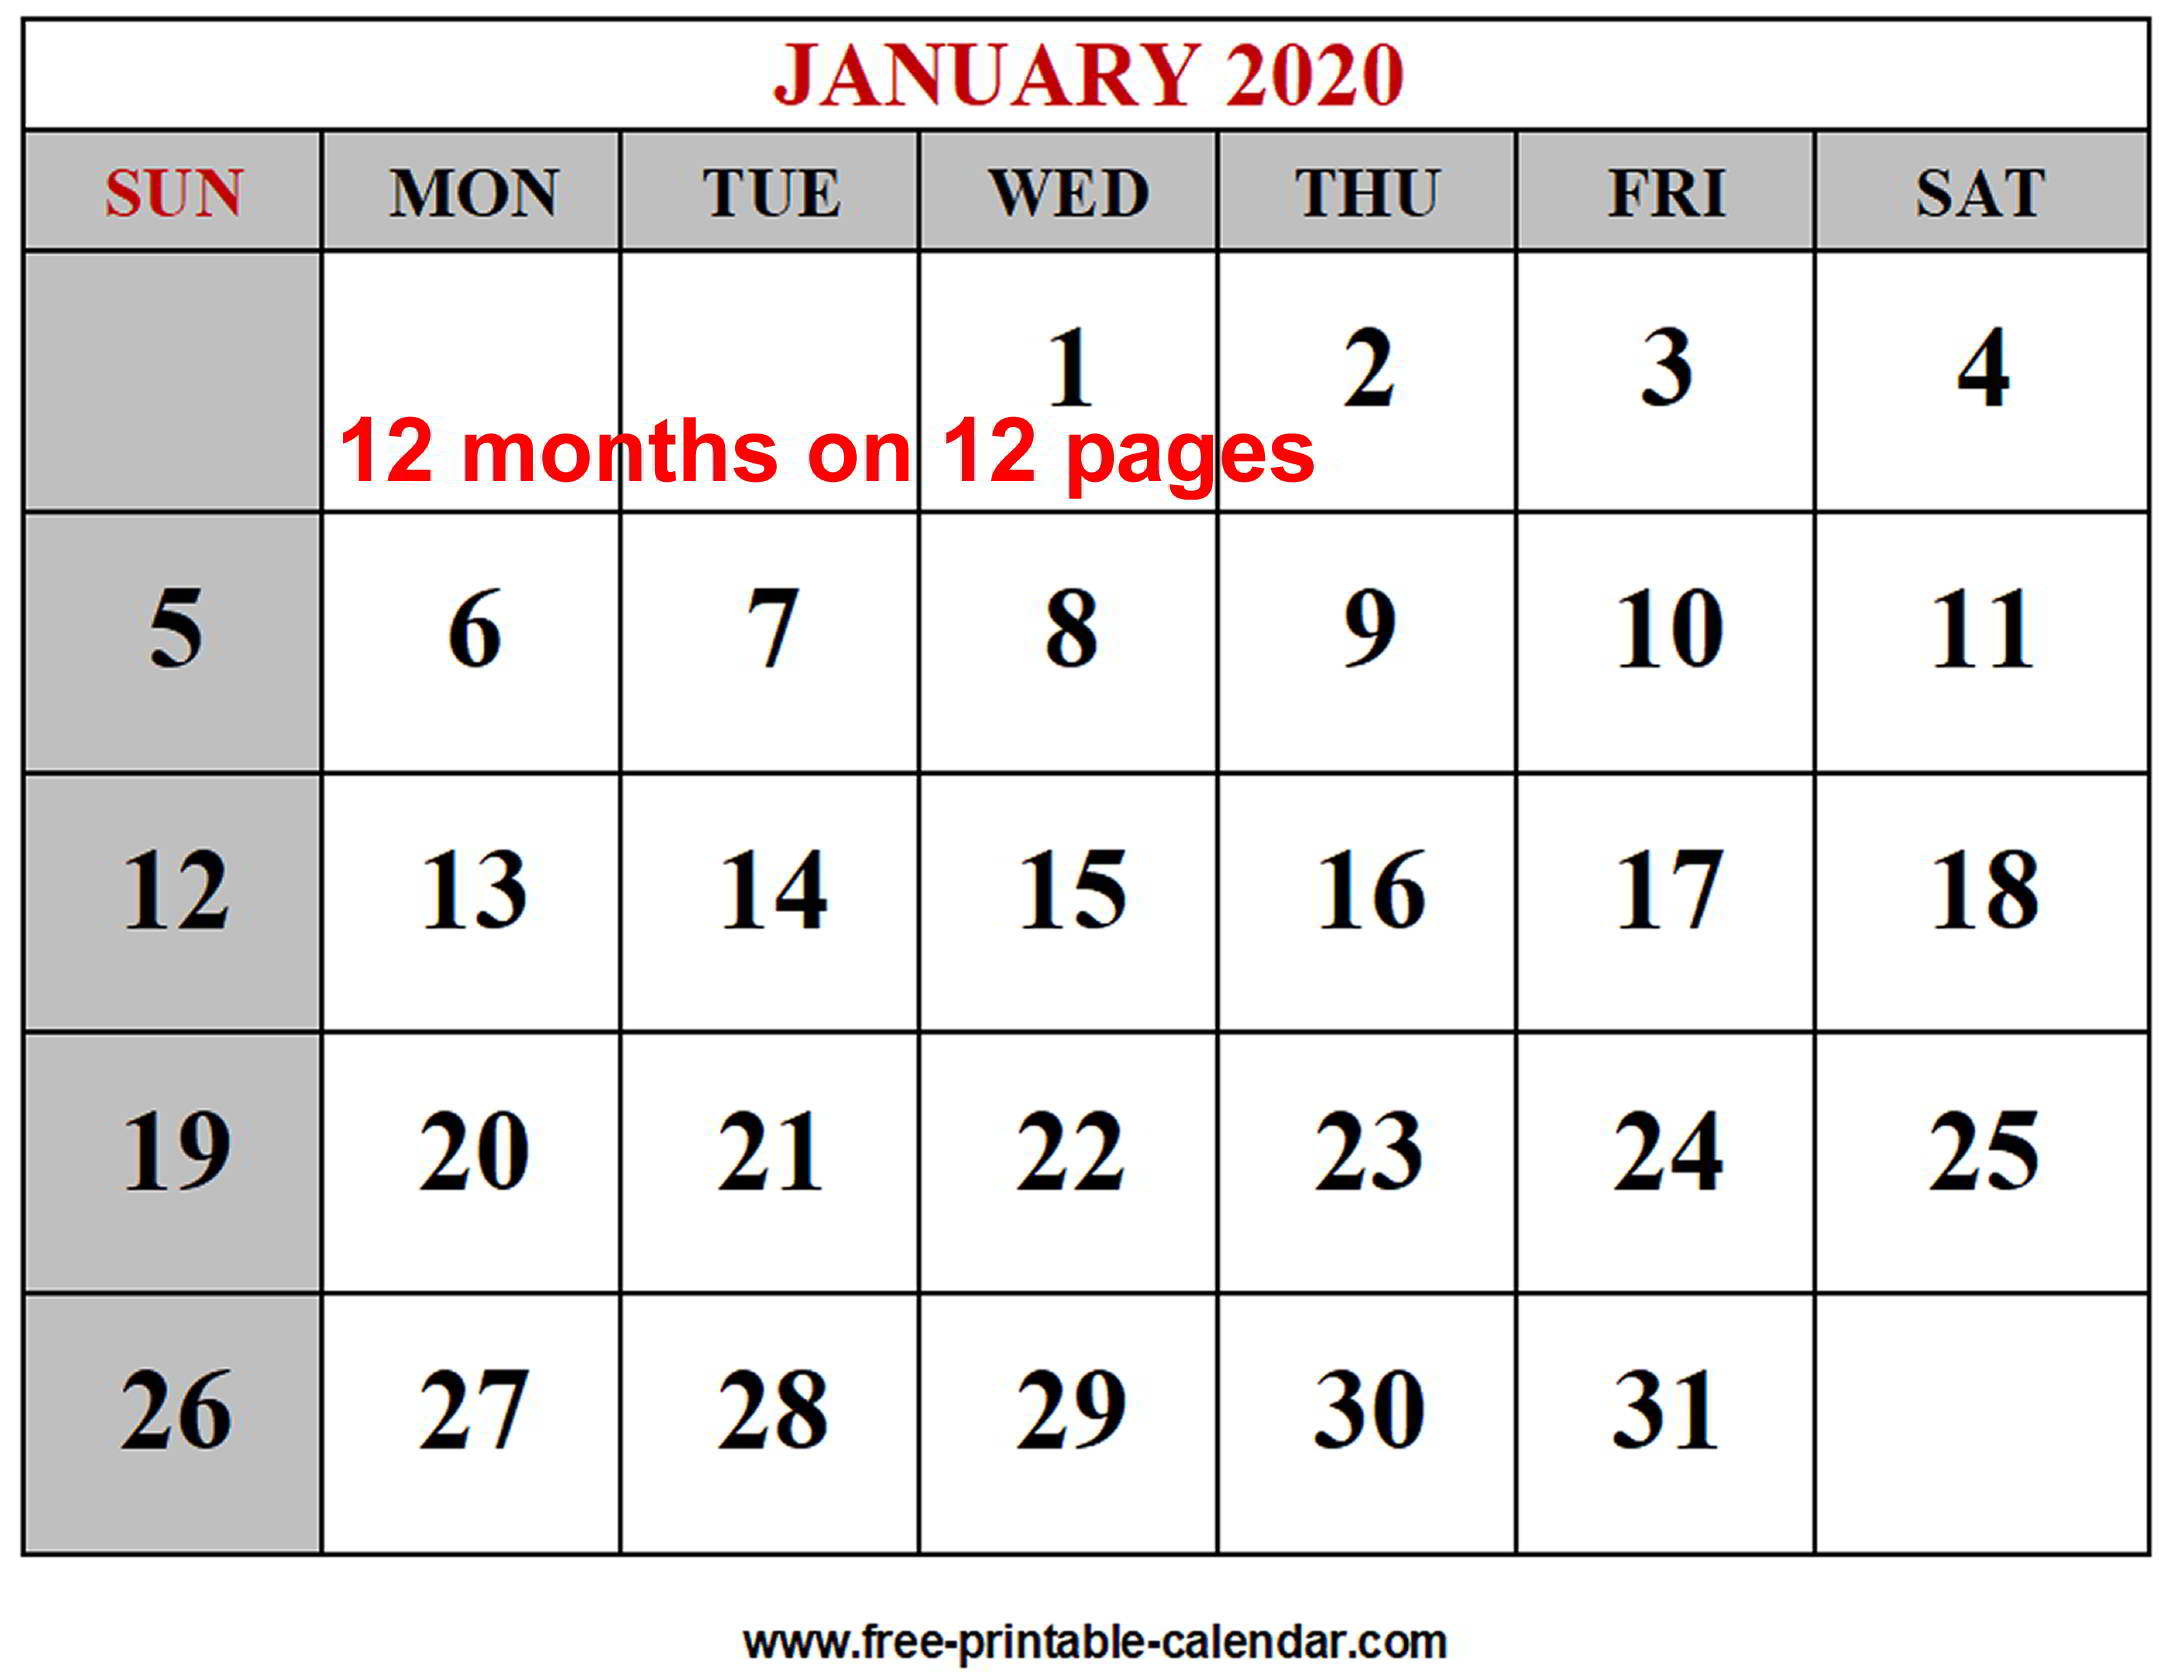 Year 2020 Calendar Templates - Free-Printable-Calendar